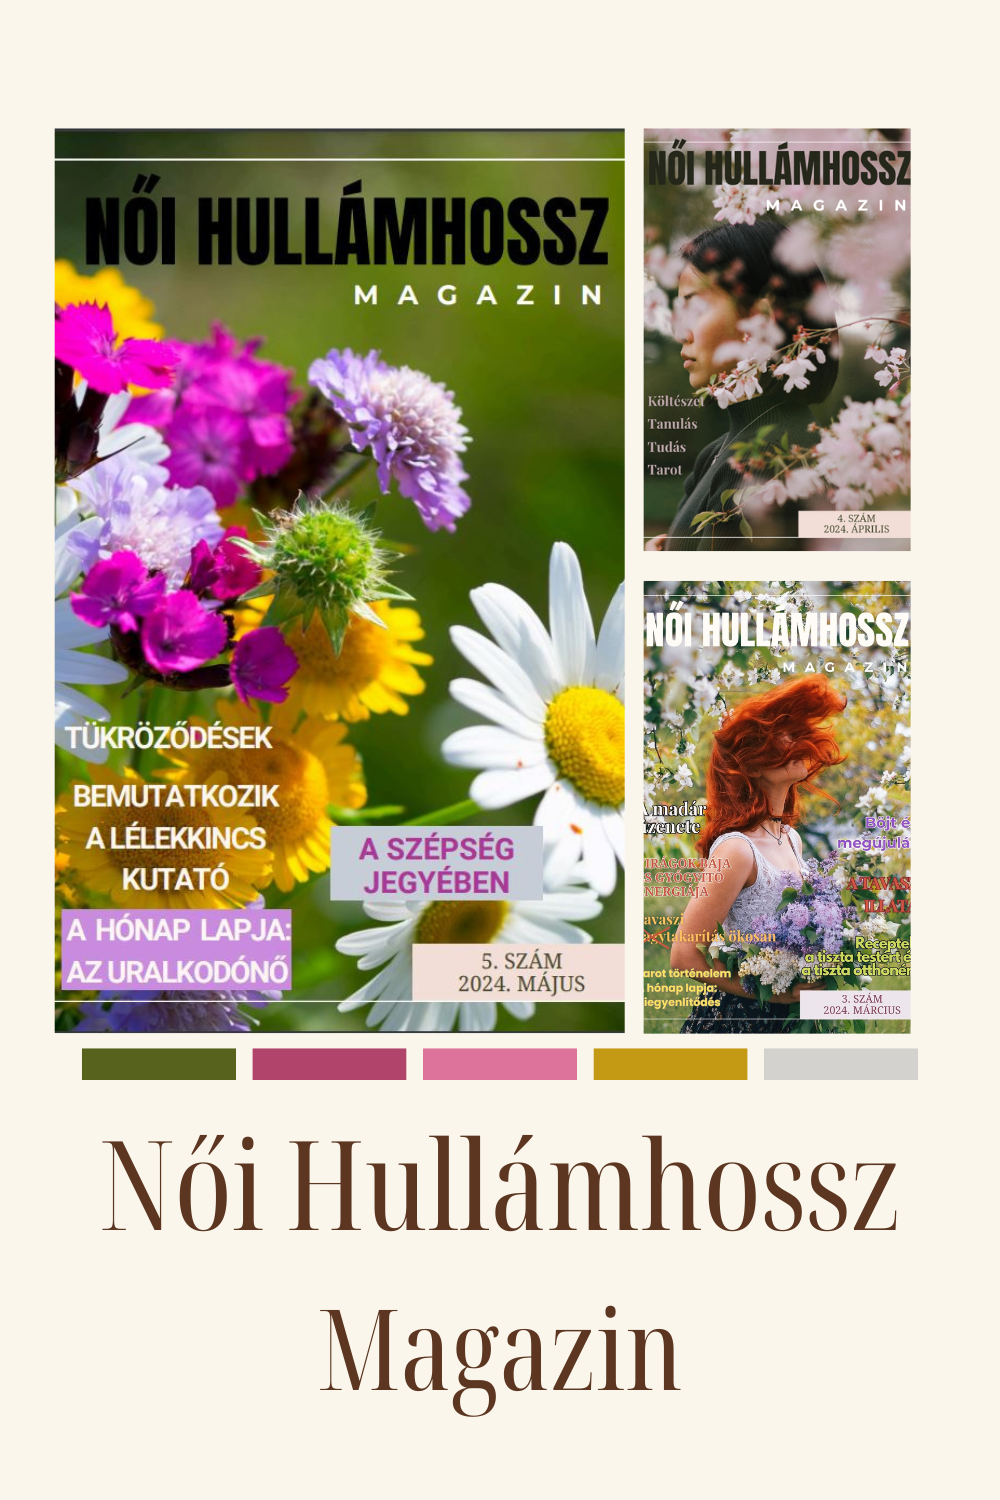 noi_hullamhossz_magazin_1.png